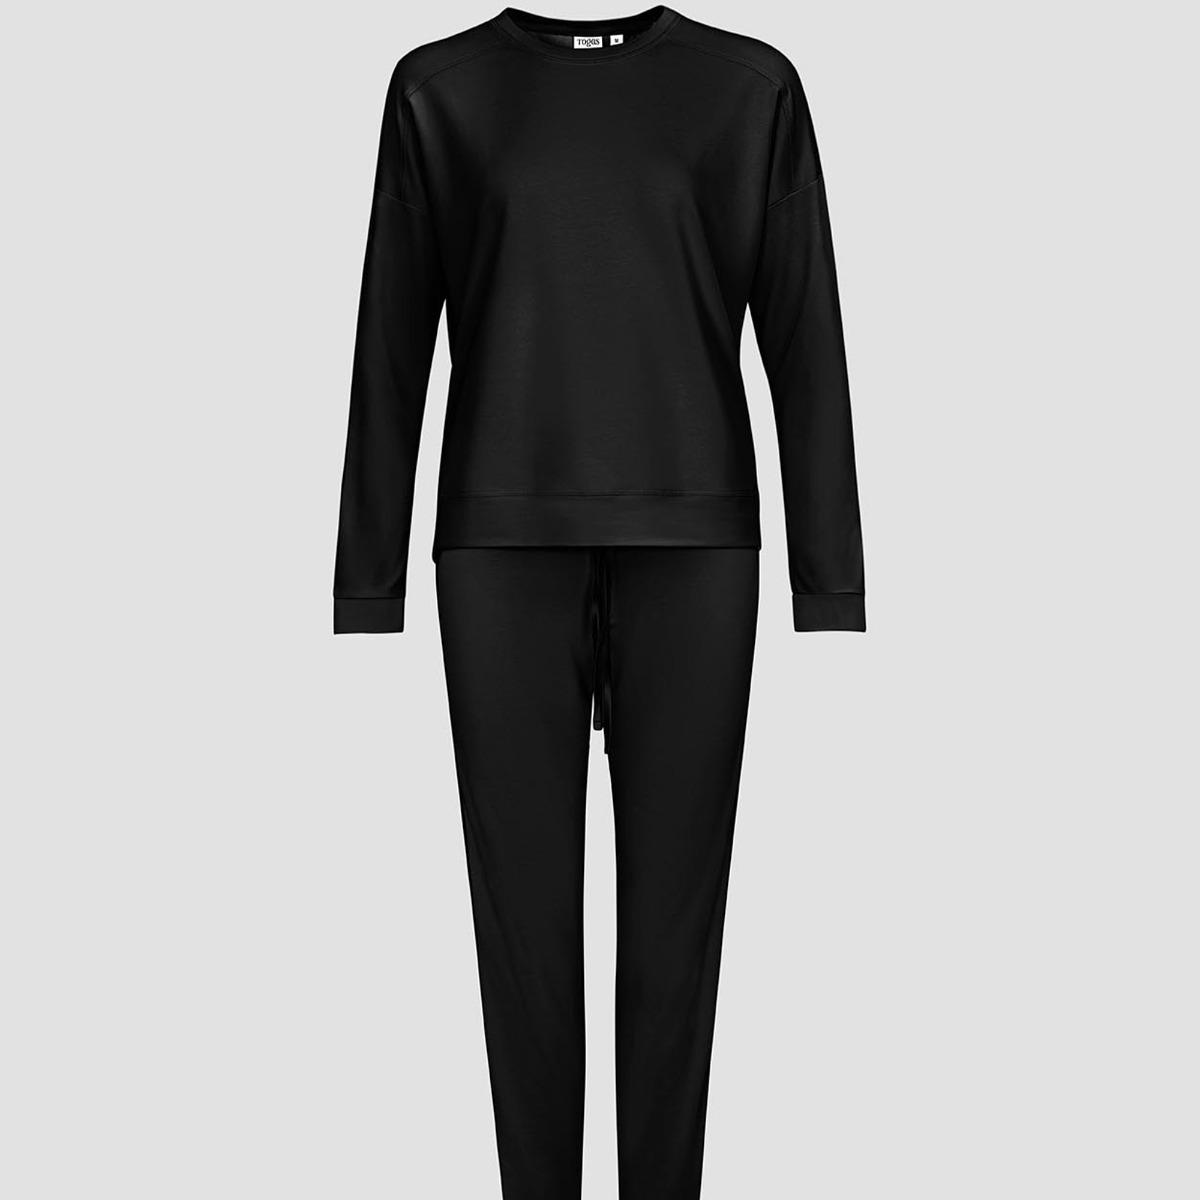 Женская пижама Togas Рене чёрная XL (50), цвет чёрный, размер 50